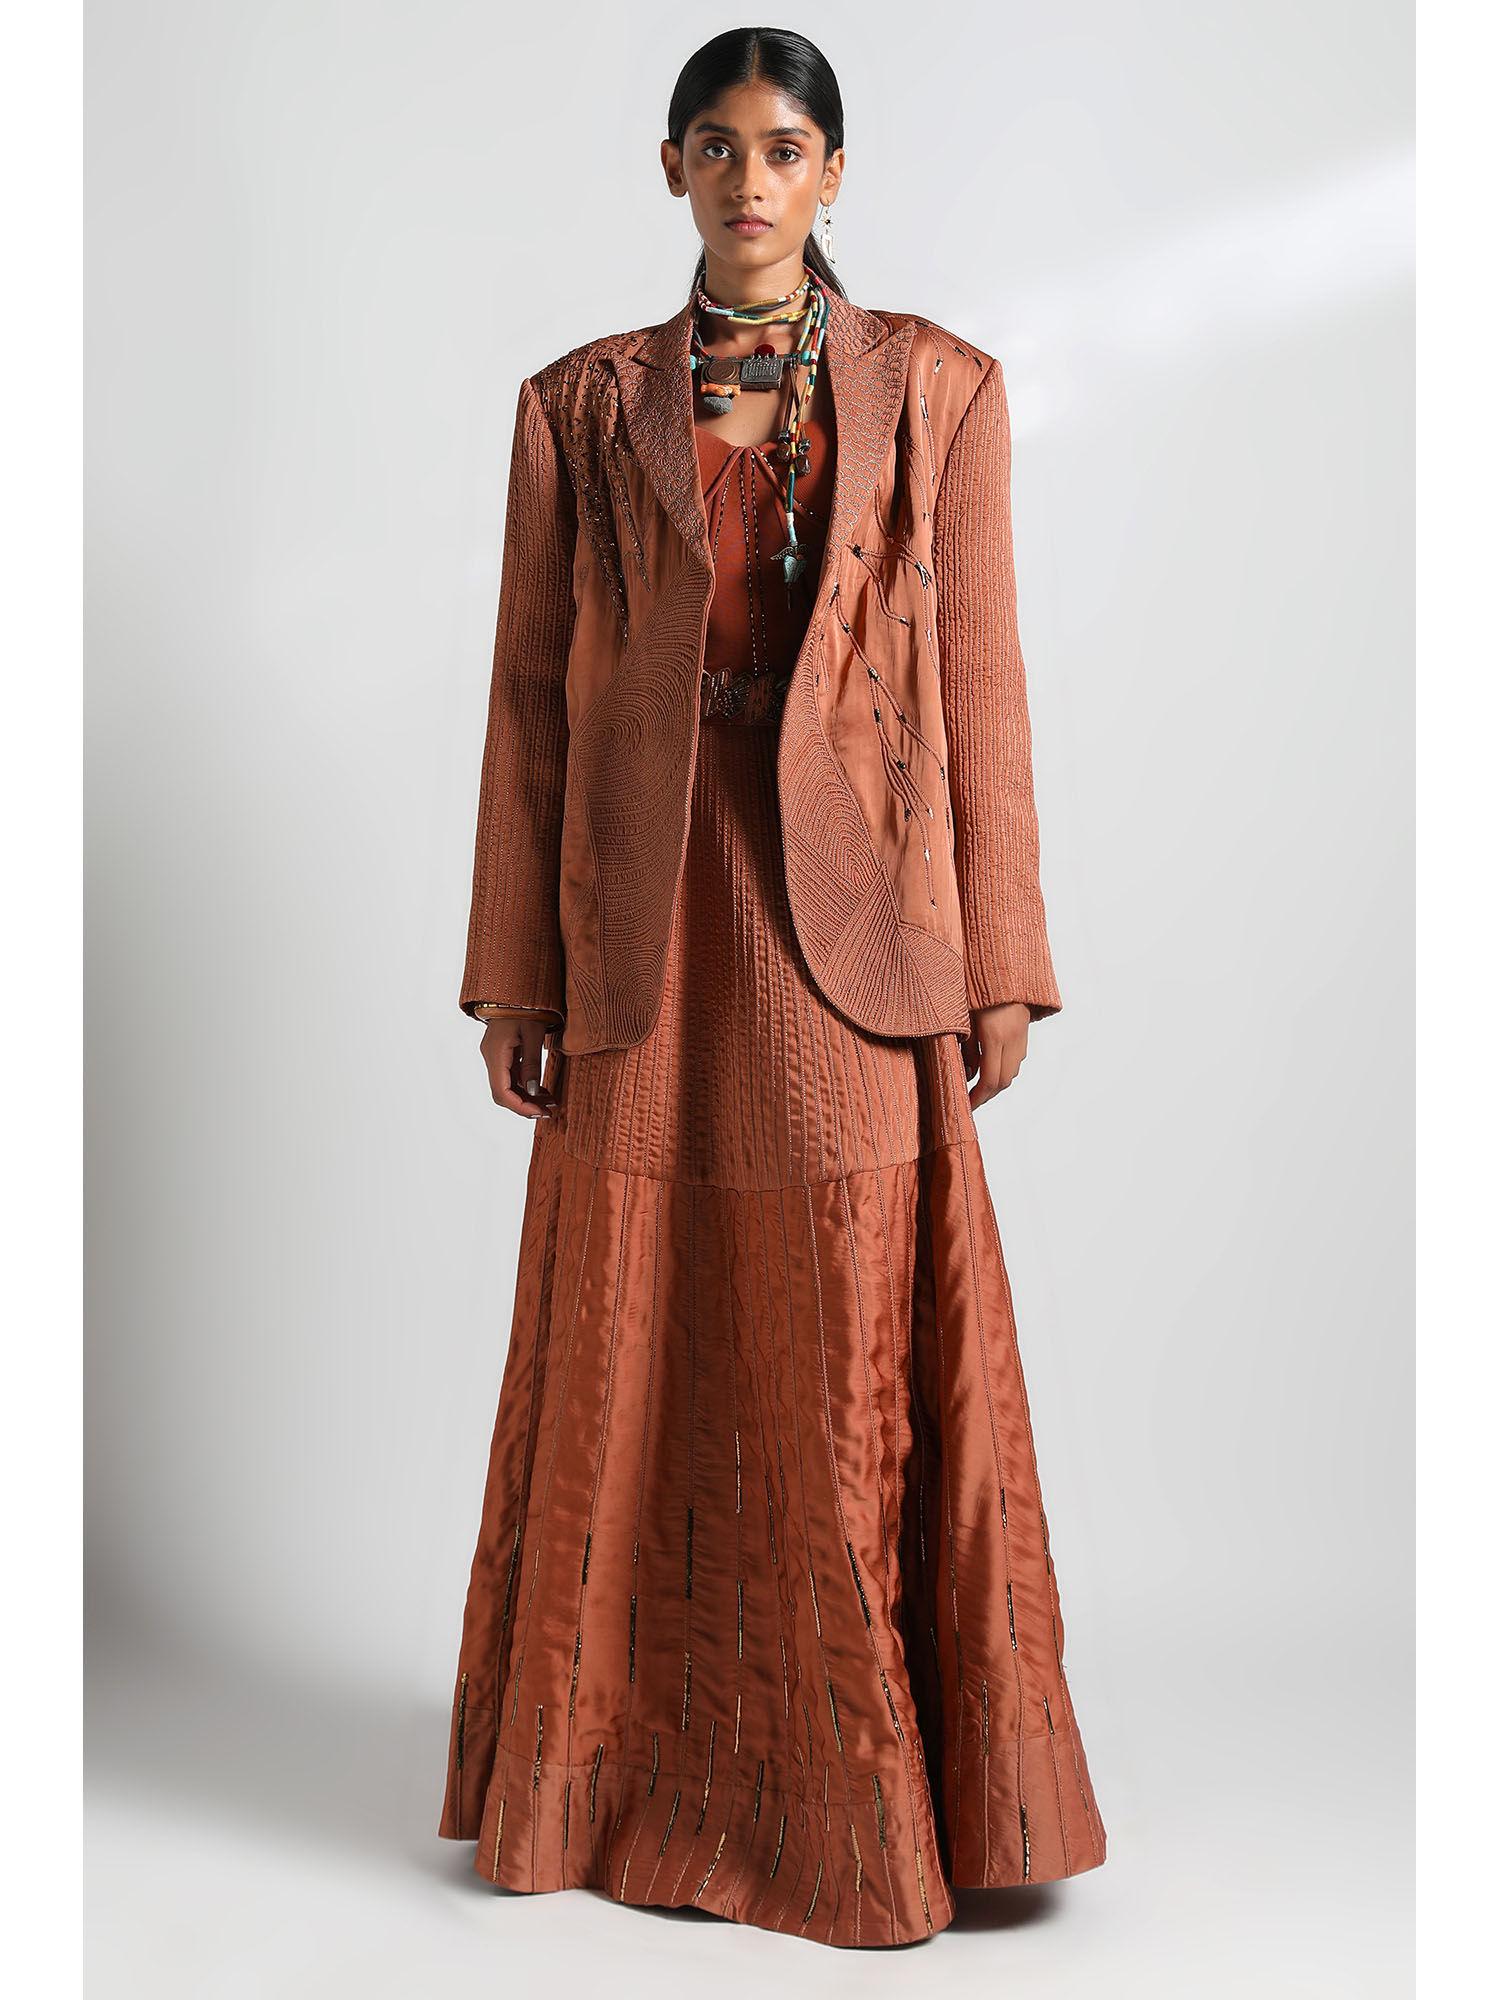 jaisalmer jacket, corset & jaisalmer lehenga (set of 3)